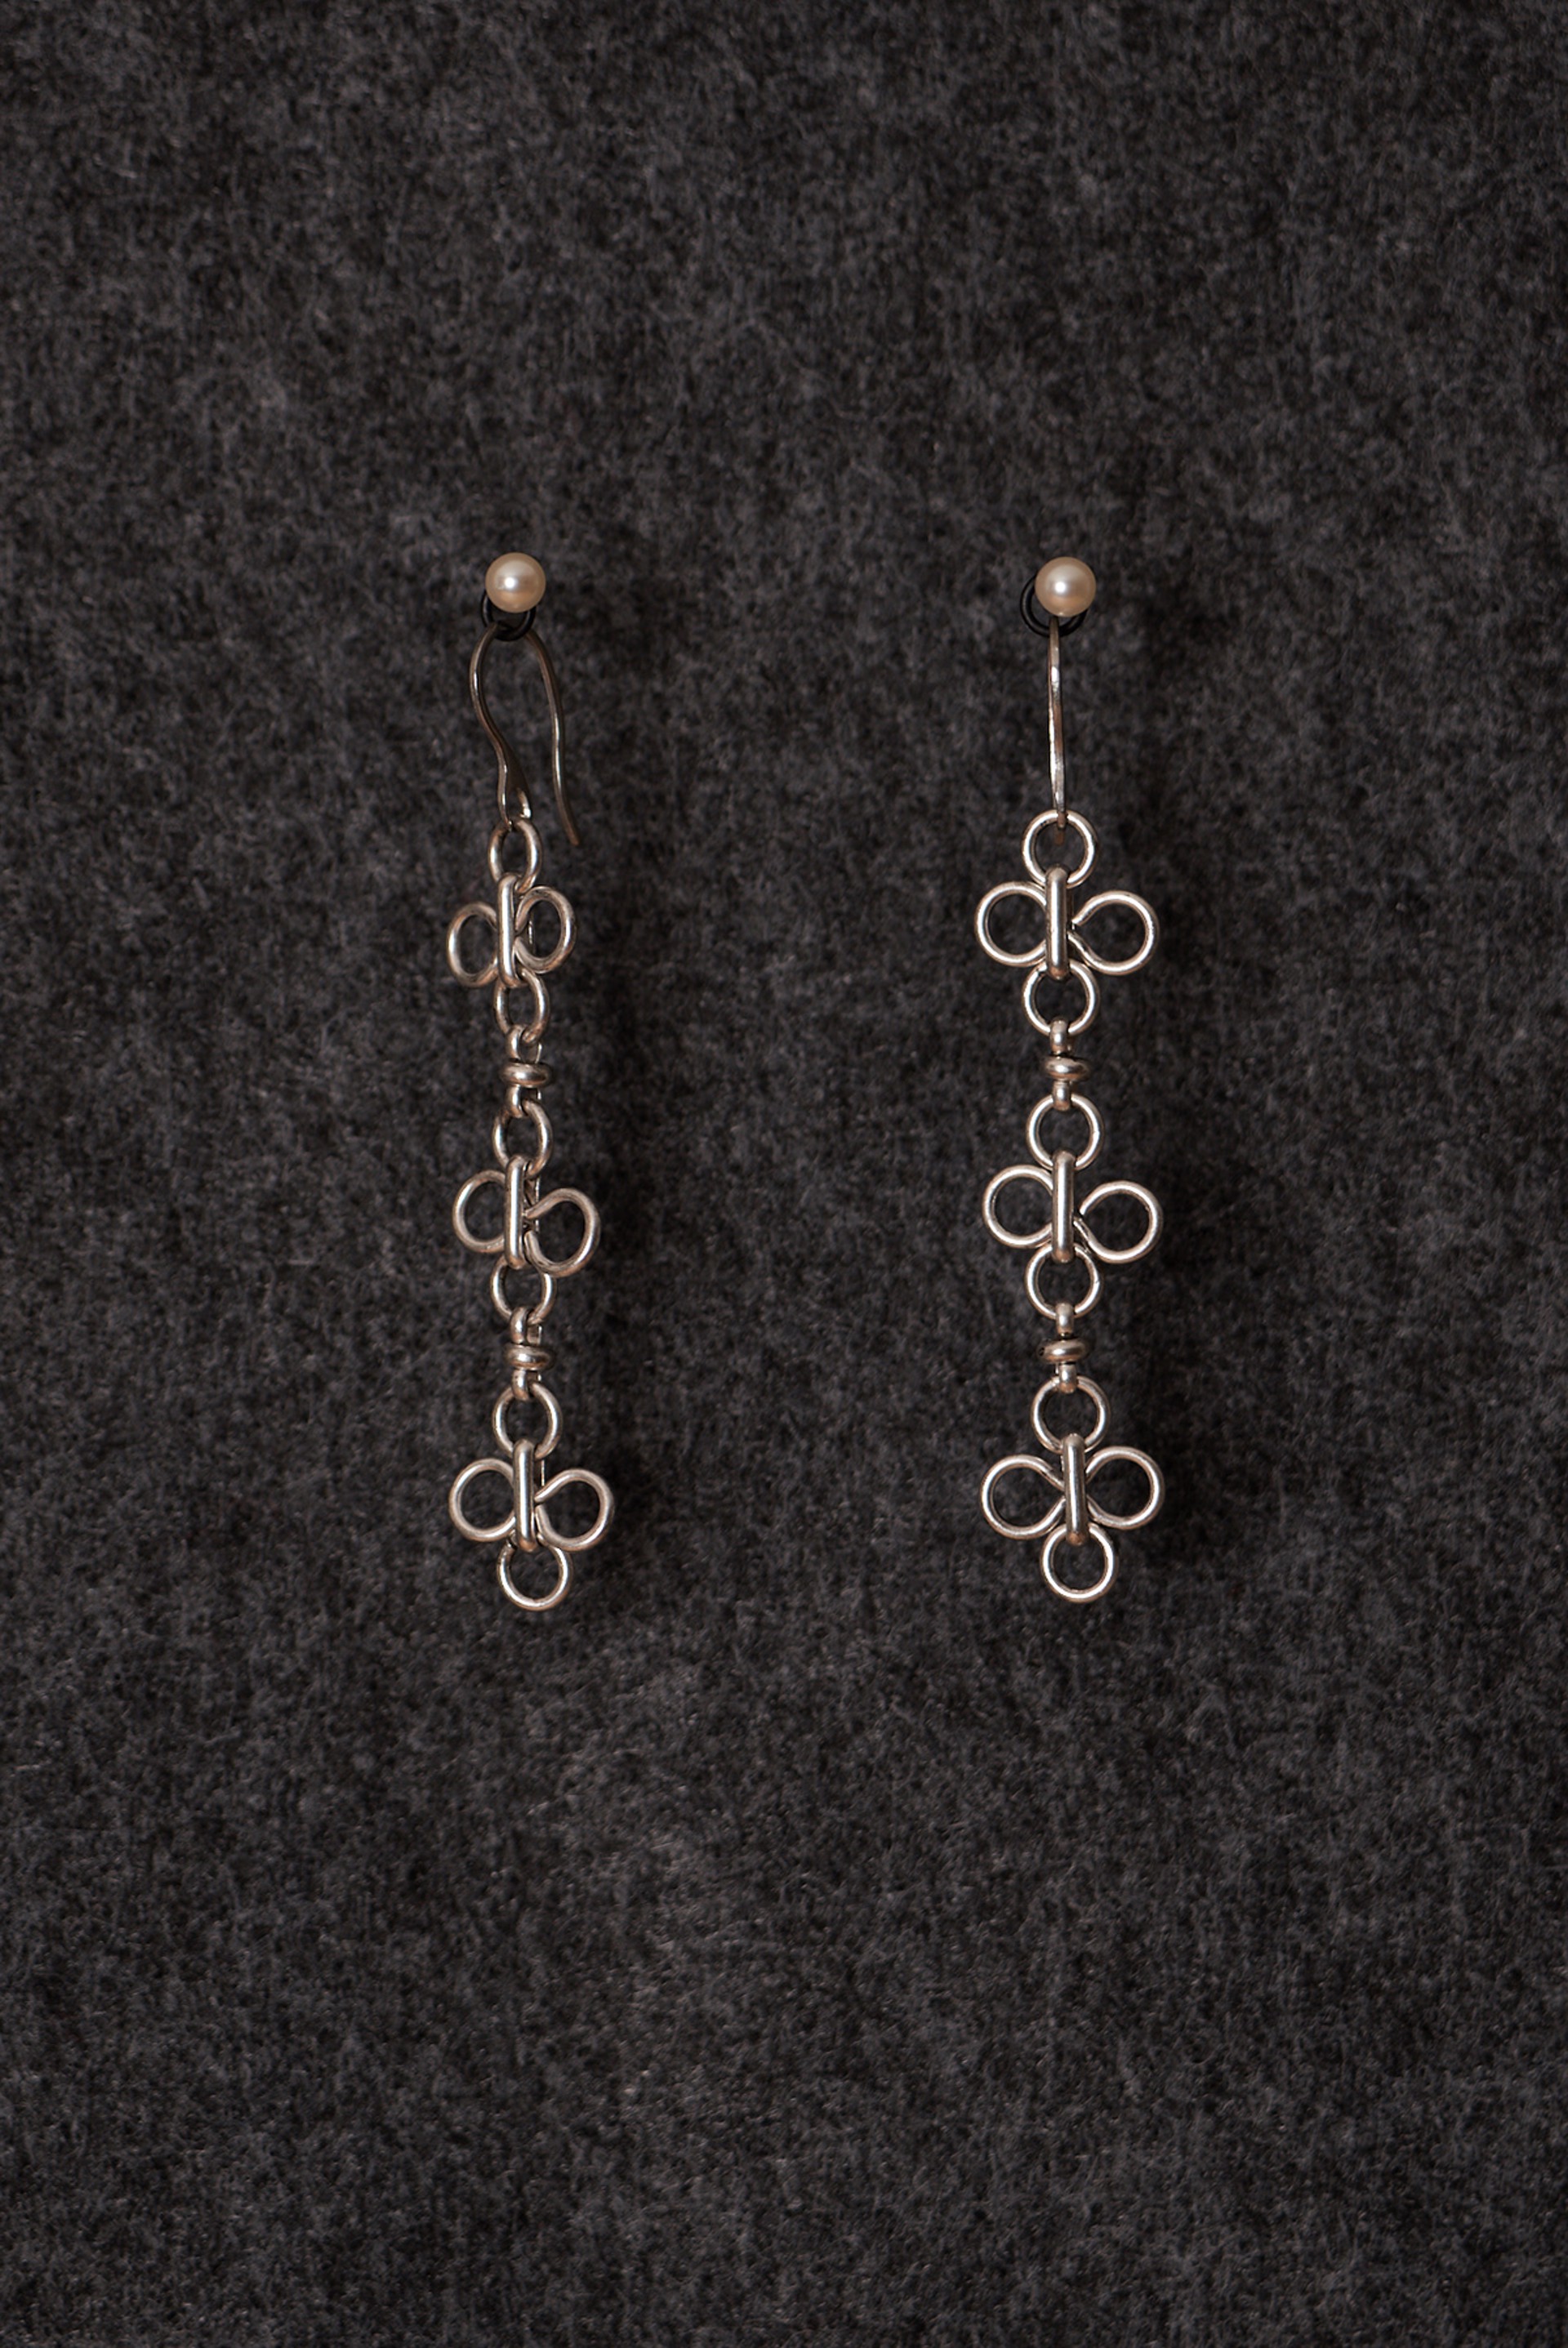 Silver Cloverlace Earrings by Cameron Johnson